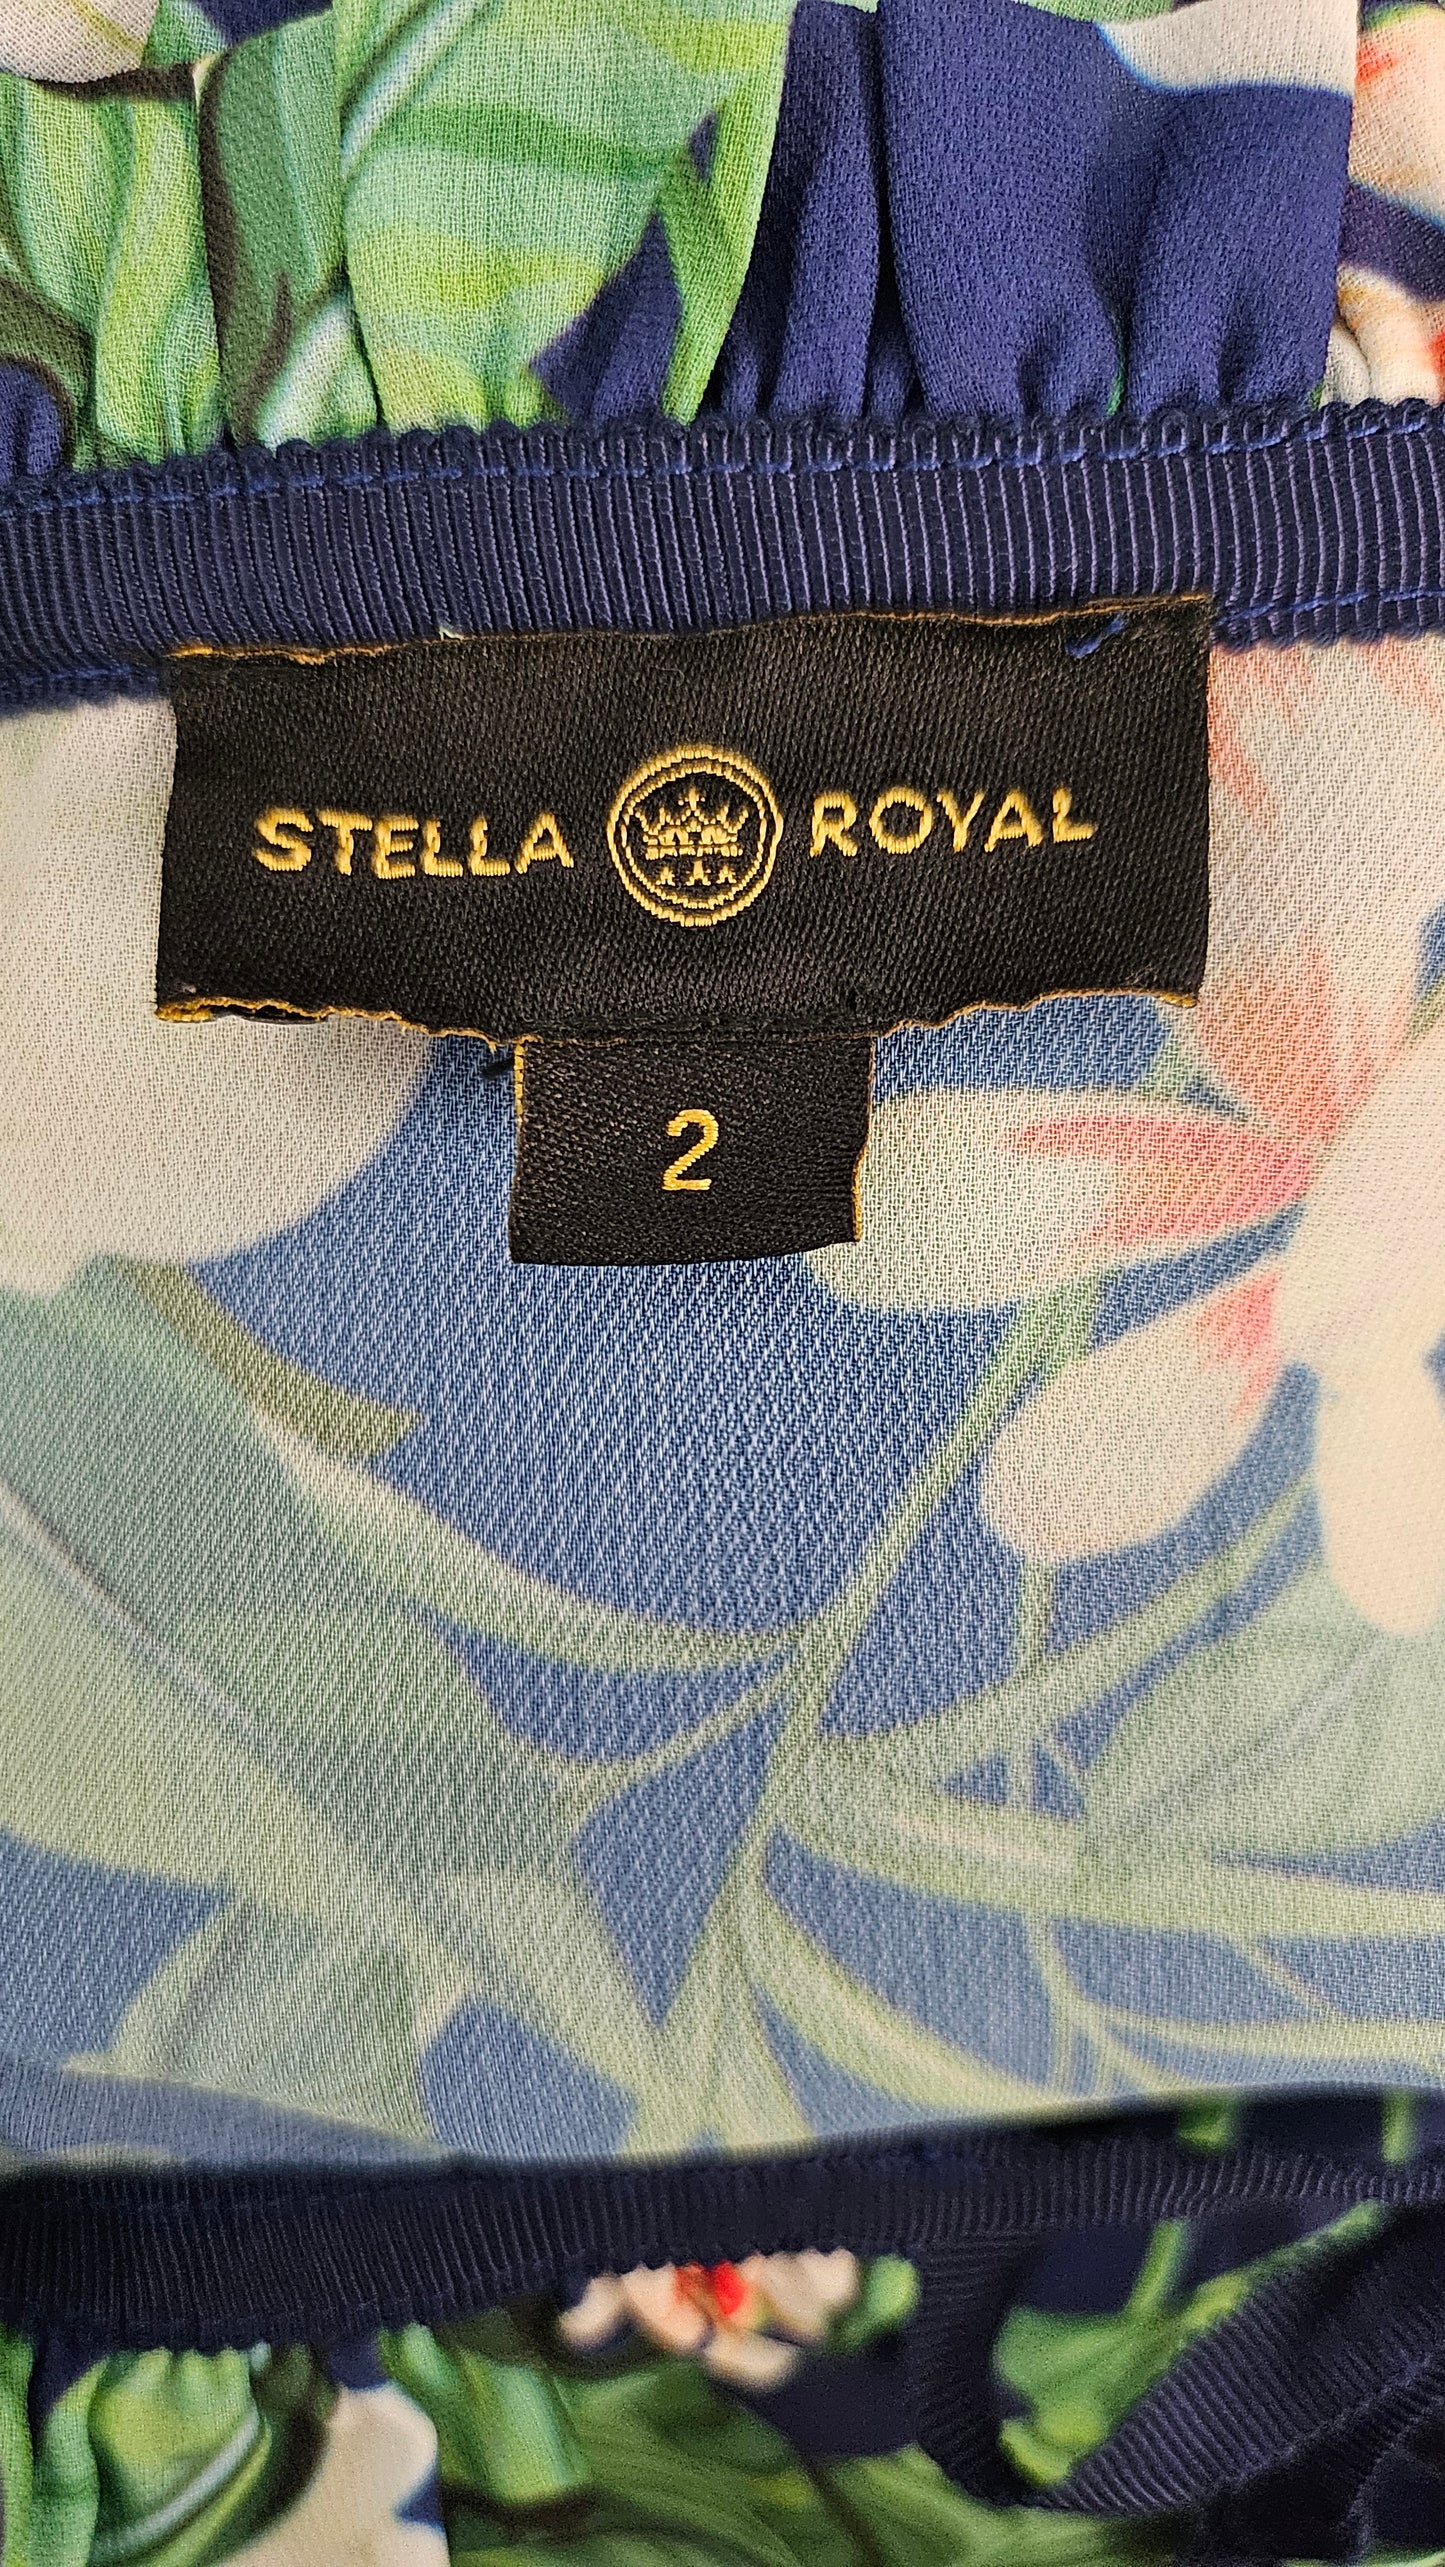 Stella Royal  Floral Top (18)